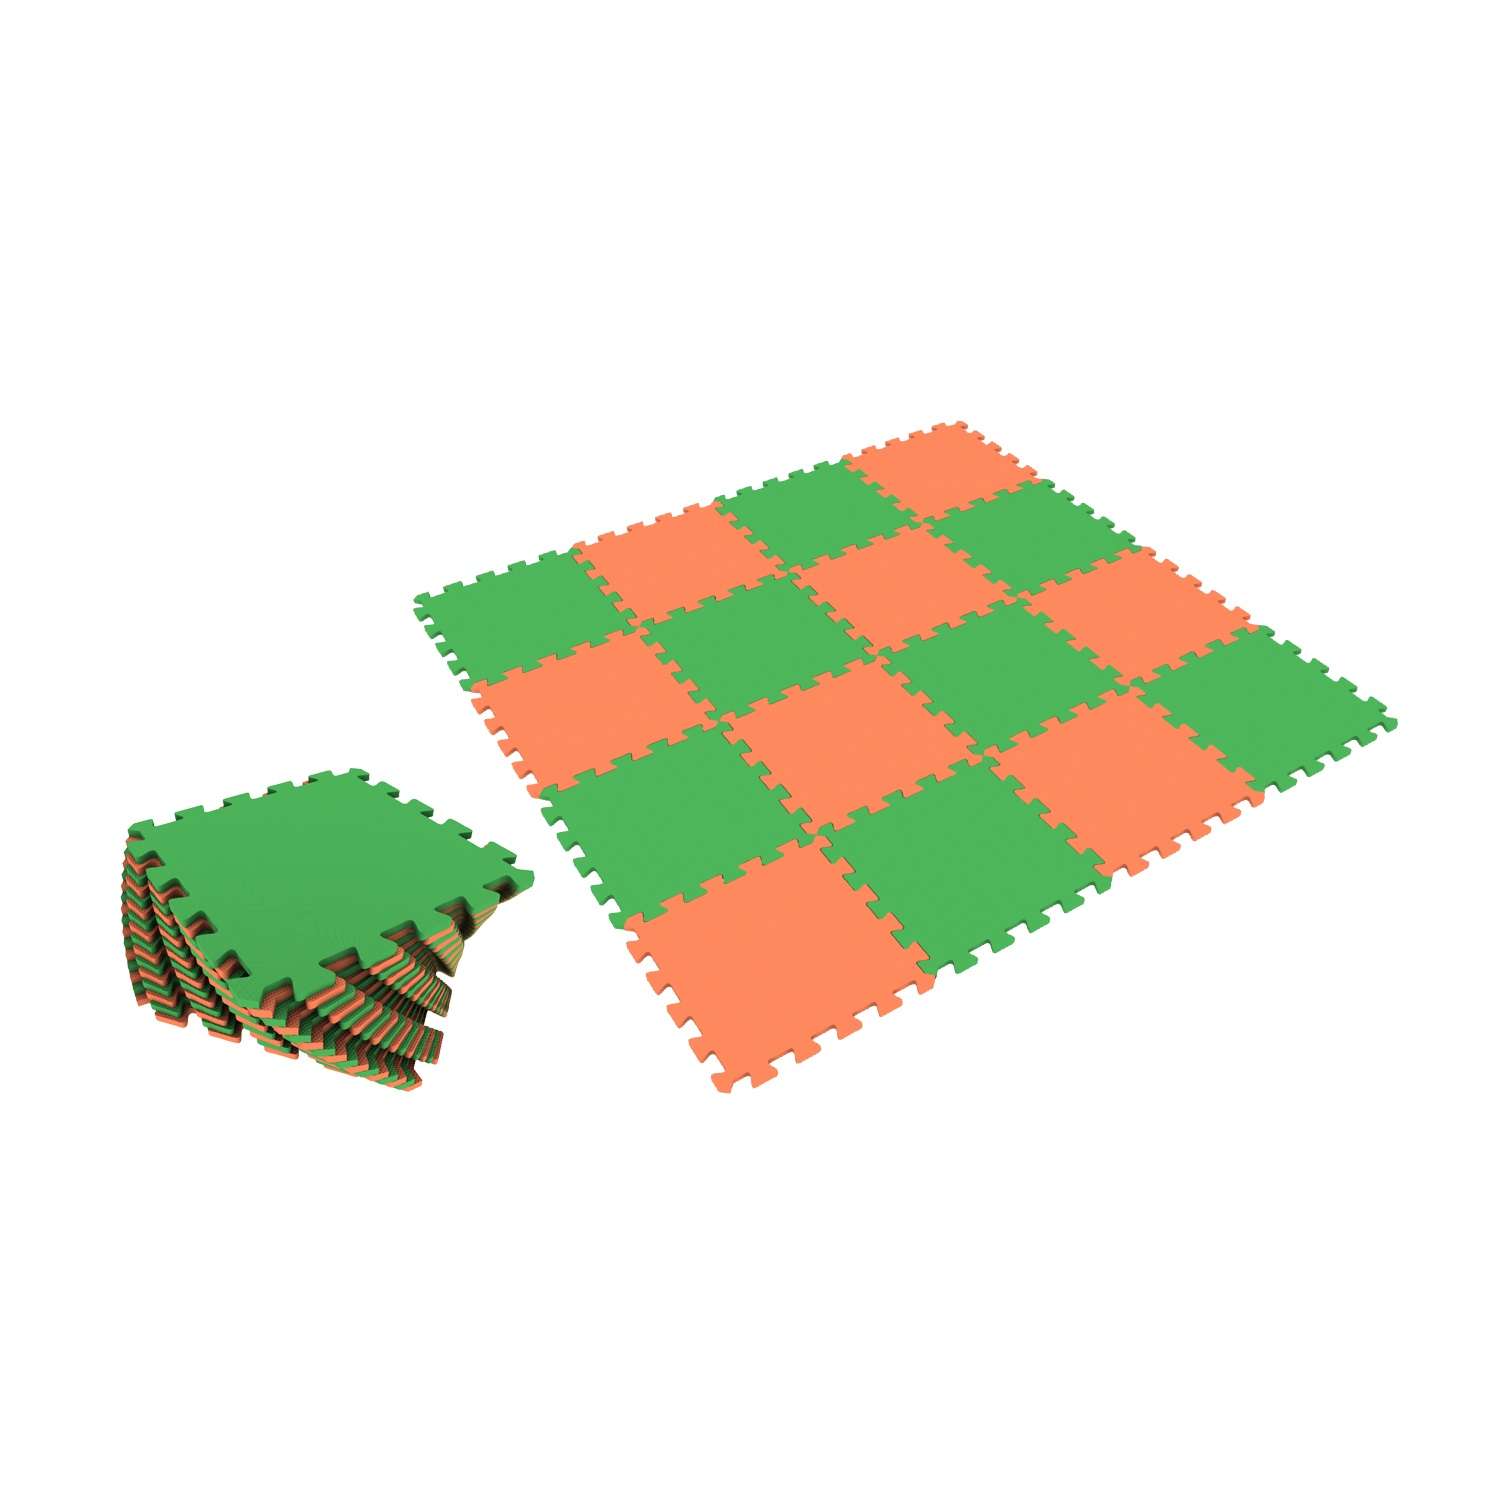 Развивающий детский коврик Eco cover мягкий пол оранжево-зеленый 25х25 - фото 2